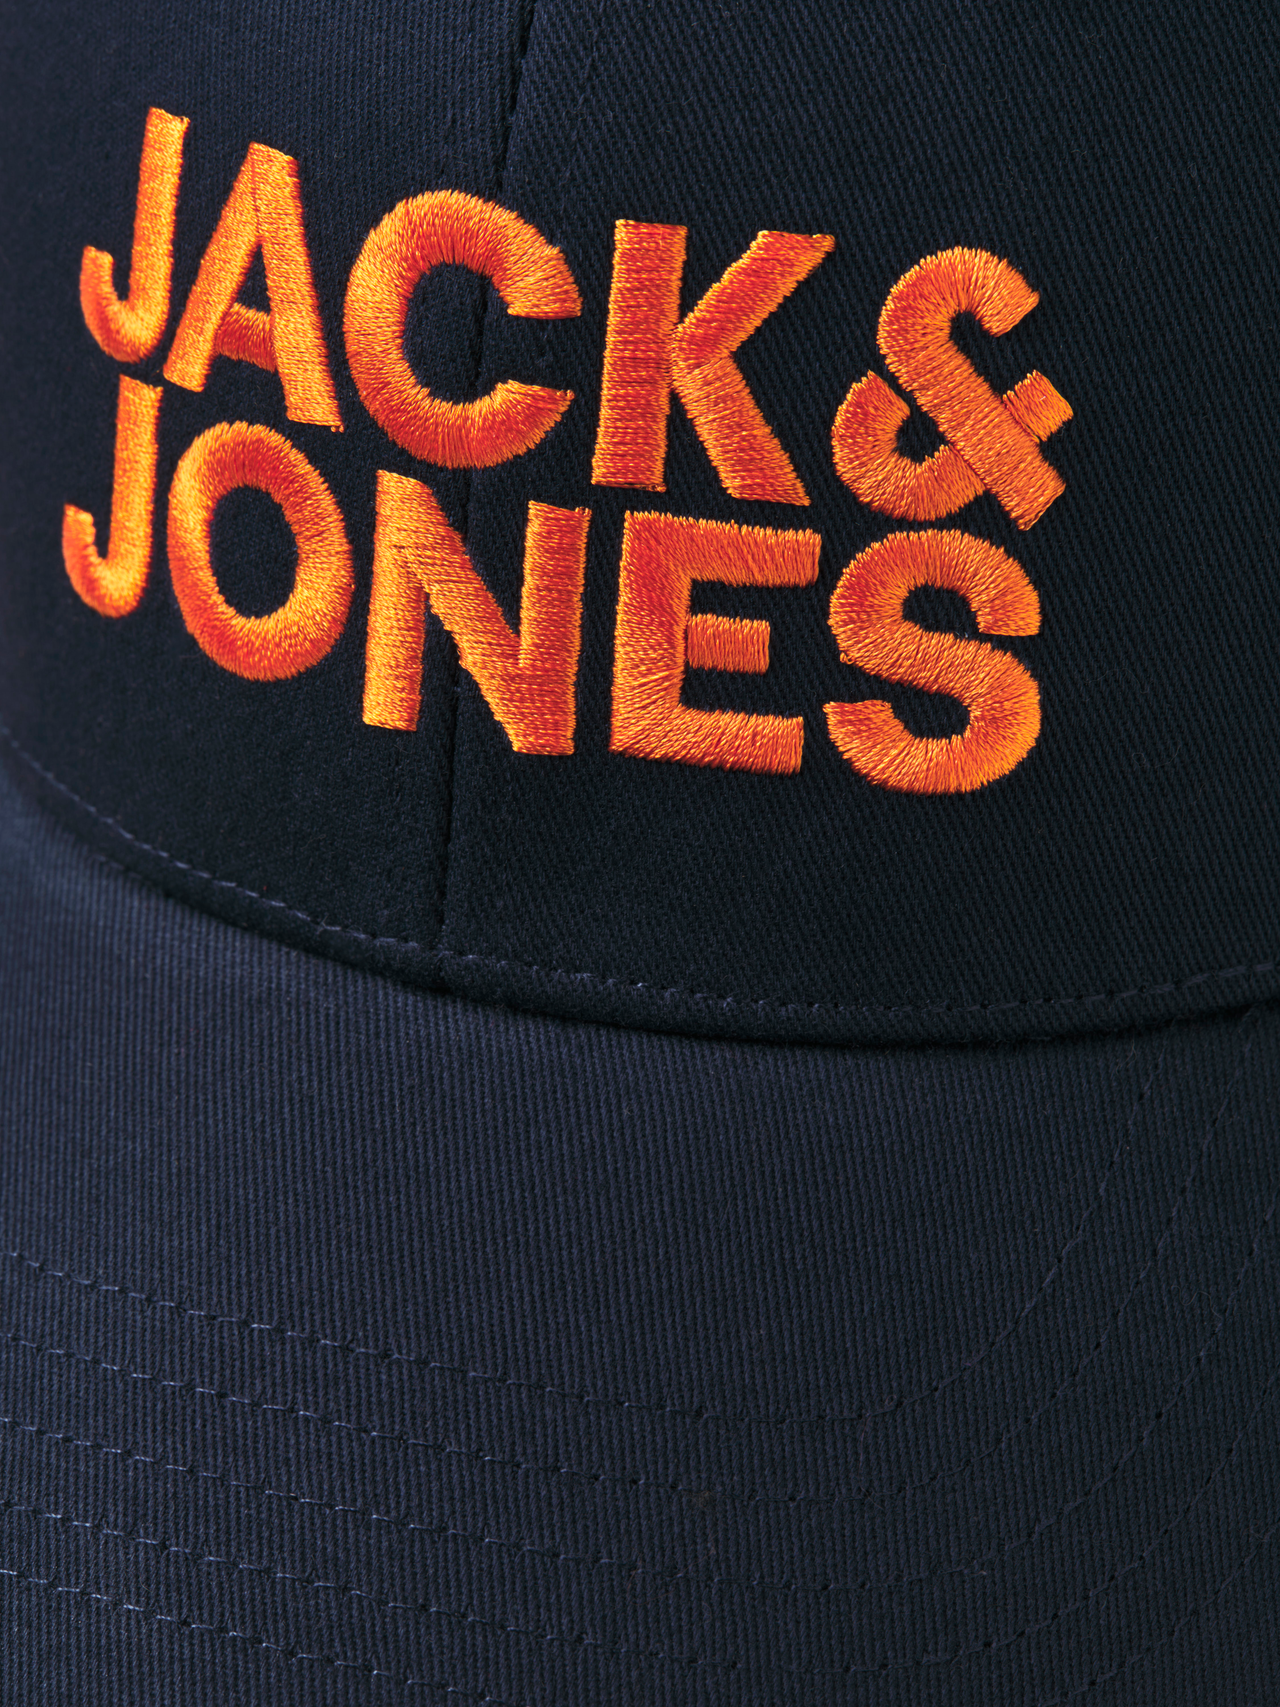 Jack & Jones Baseball pet -Navy Blazer - 12254296